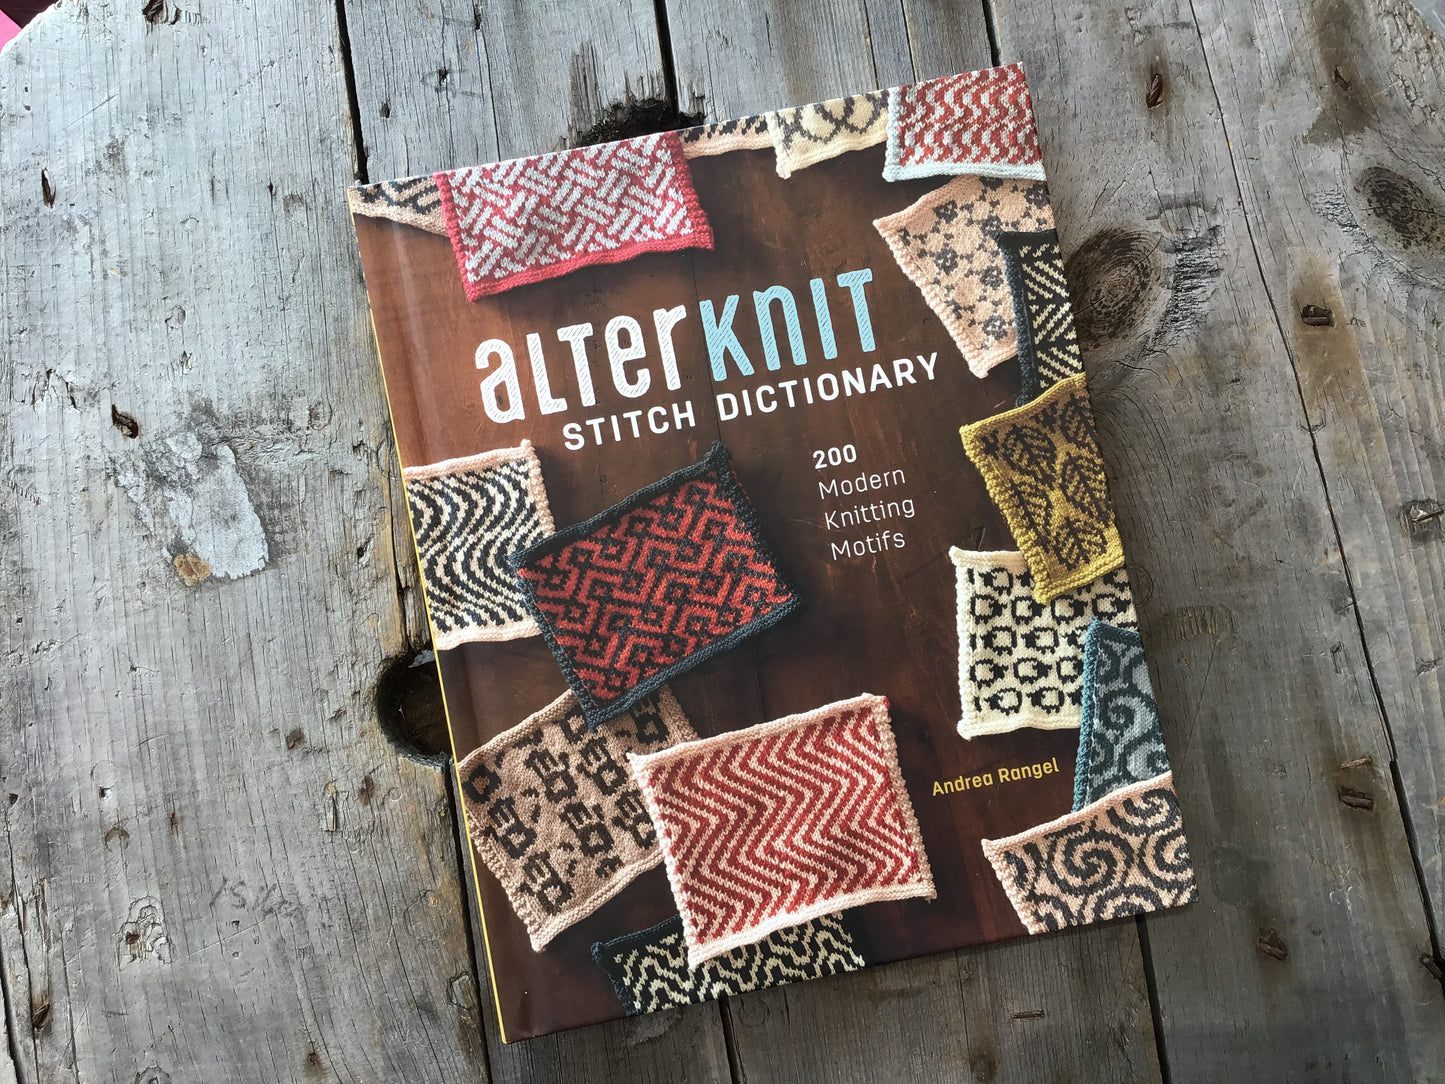 AlterKnit Stitch Dictionary